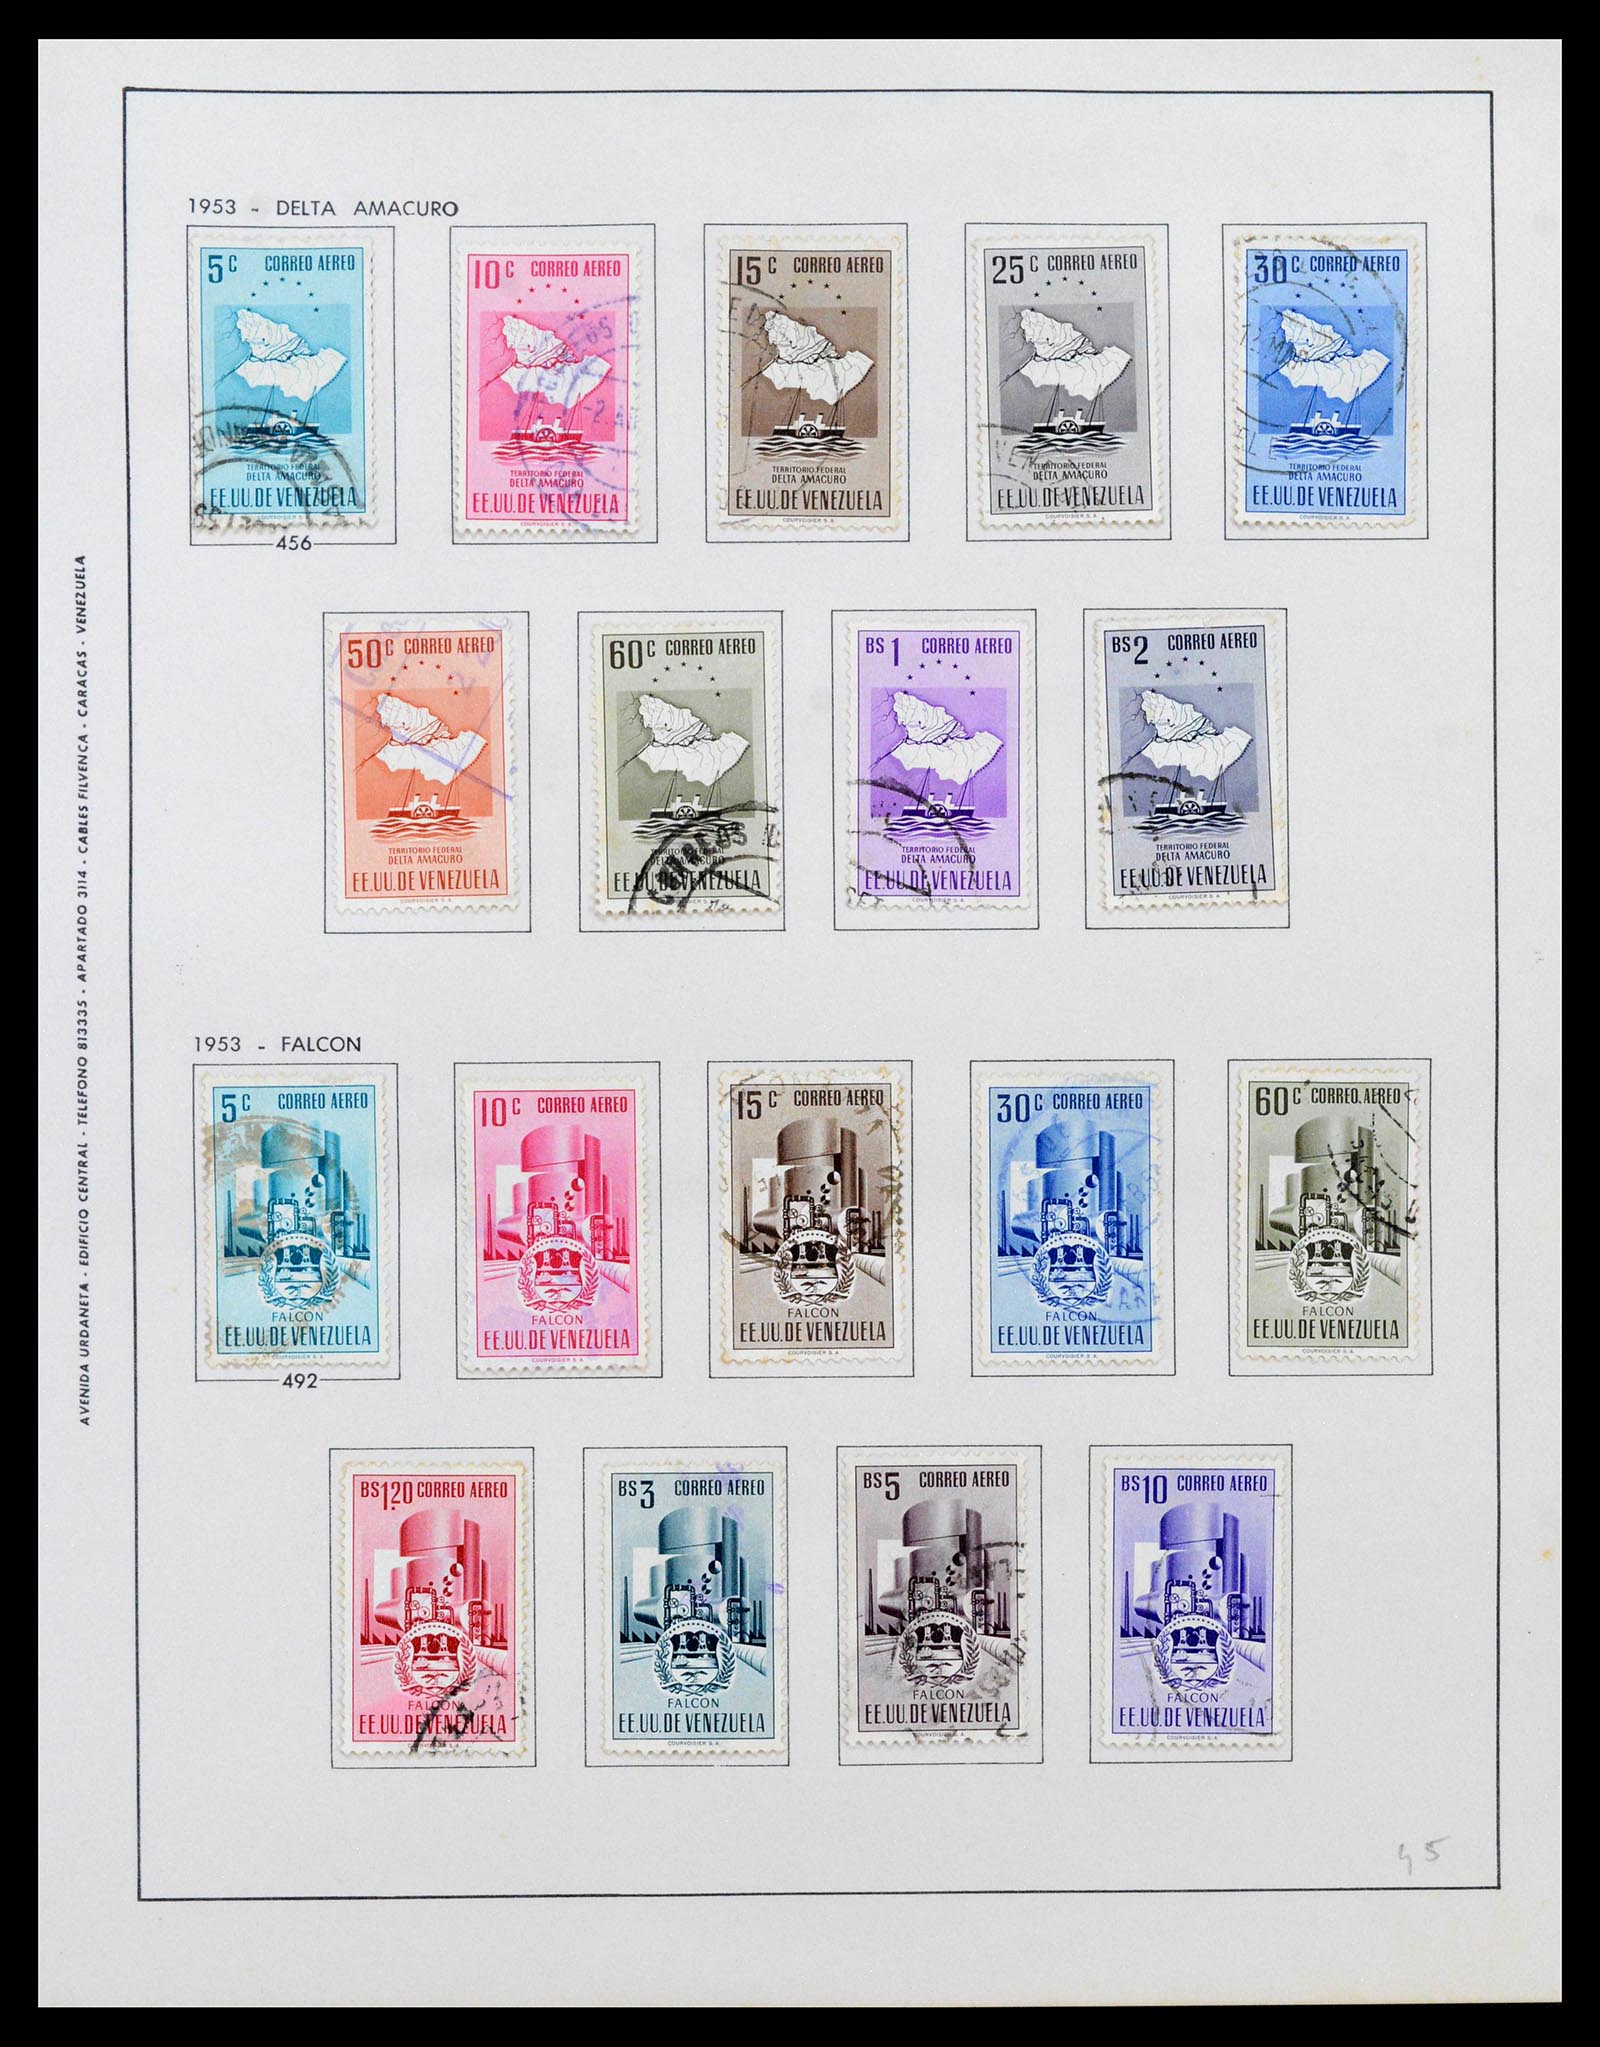 39436 0027 - Stamp collection 39436 Venezuela 1859-1985.